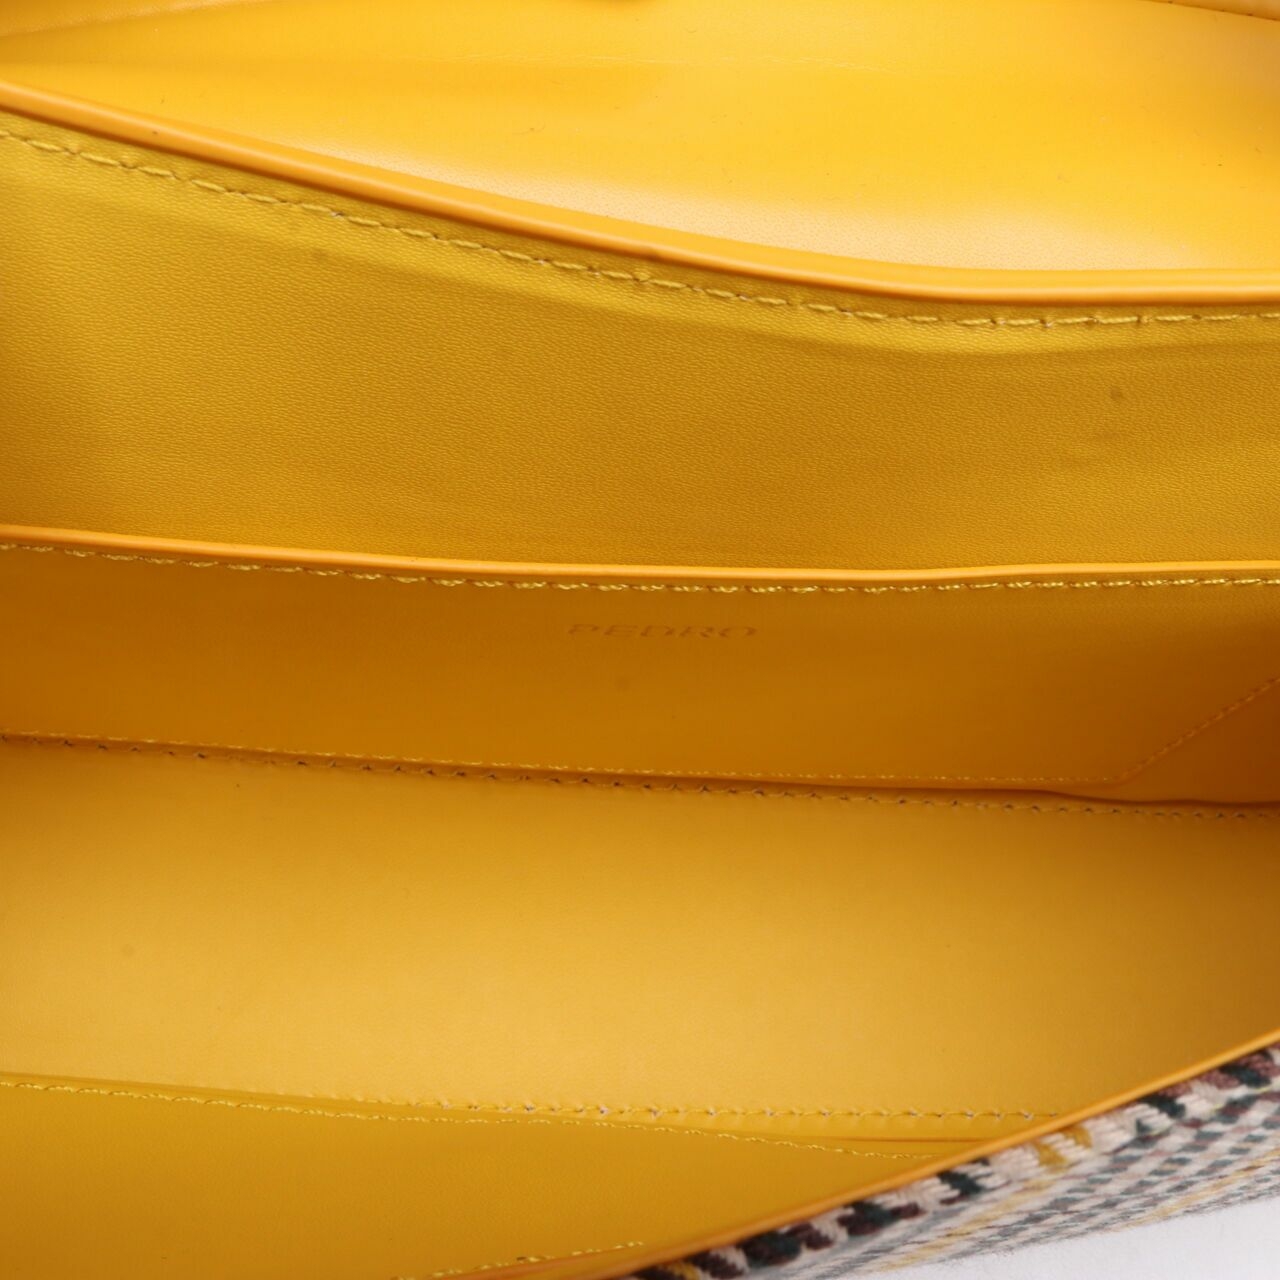 Pedro Yellow Shoulder Bag